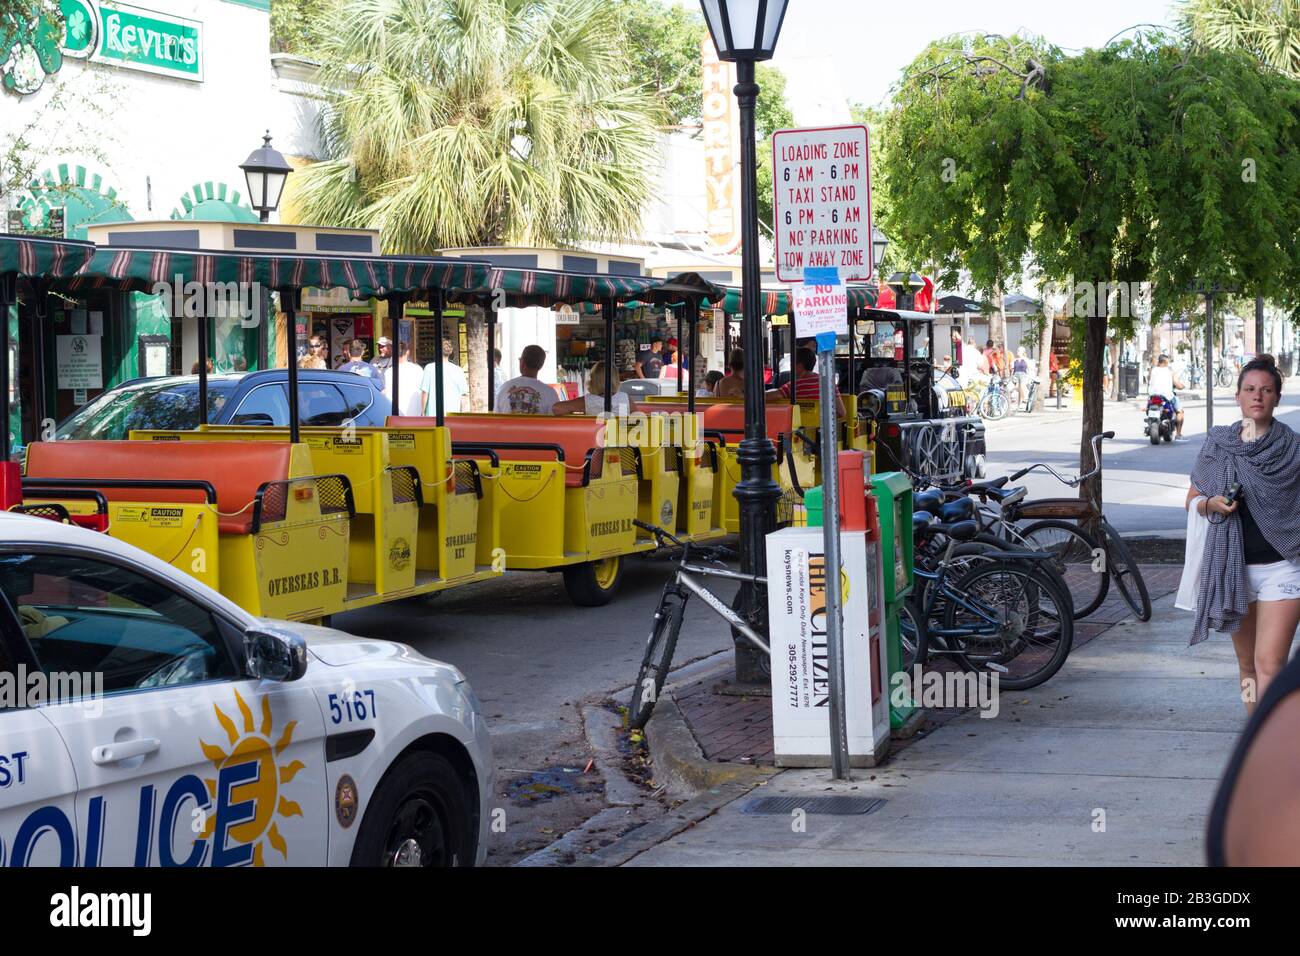 KEY WEST-AUGUST 6, 2015: A tourist tram rolls through downtown Key West, Florida. Stock Photo